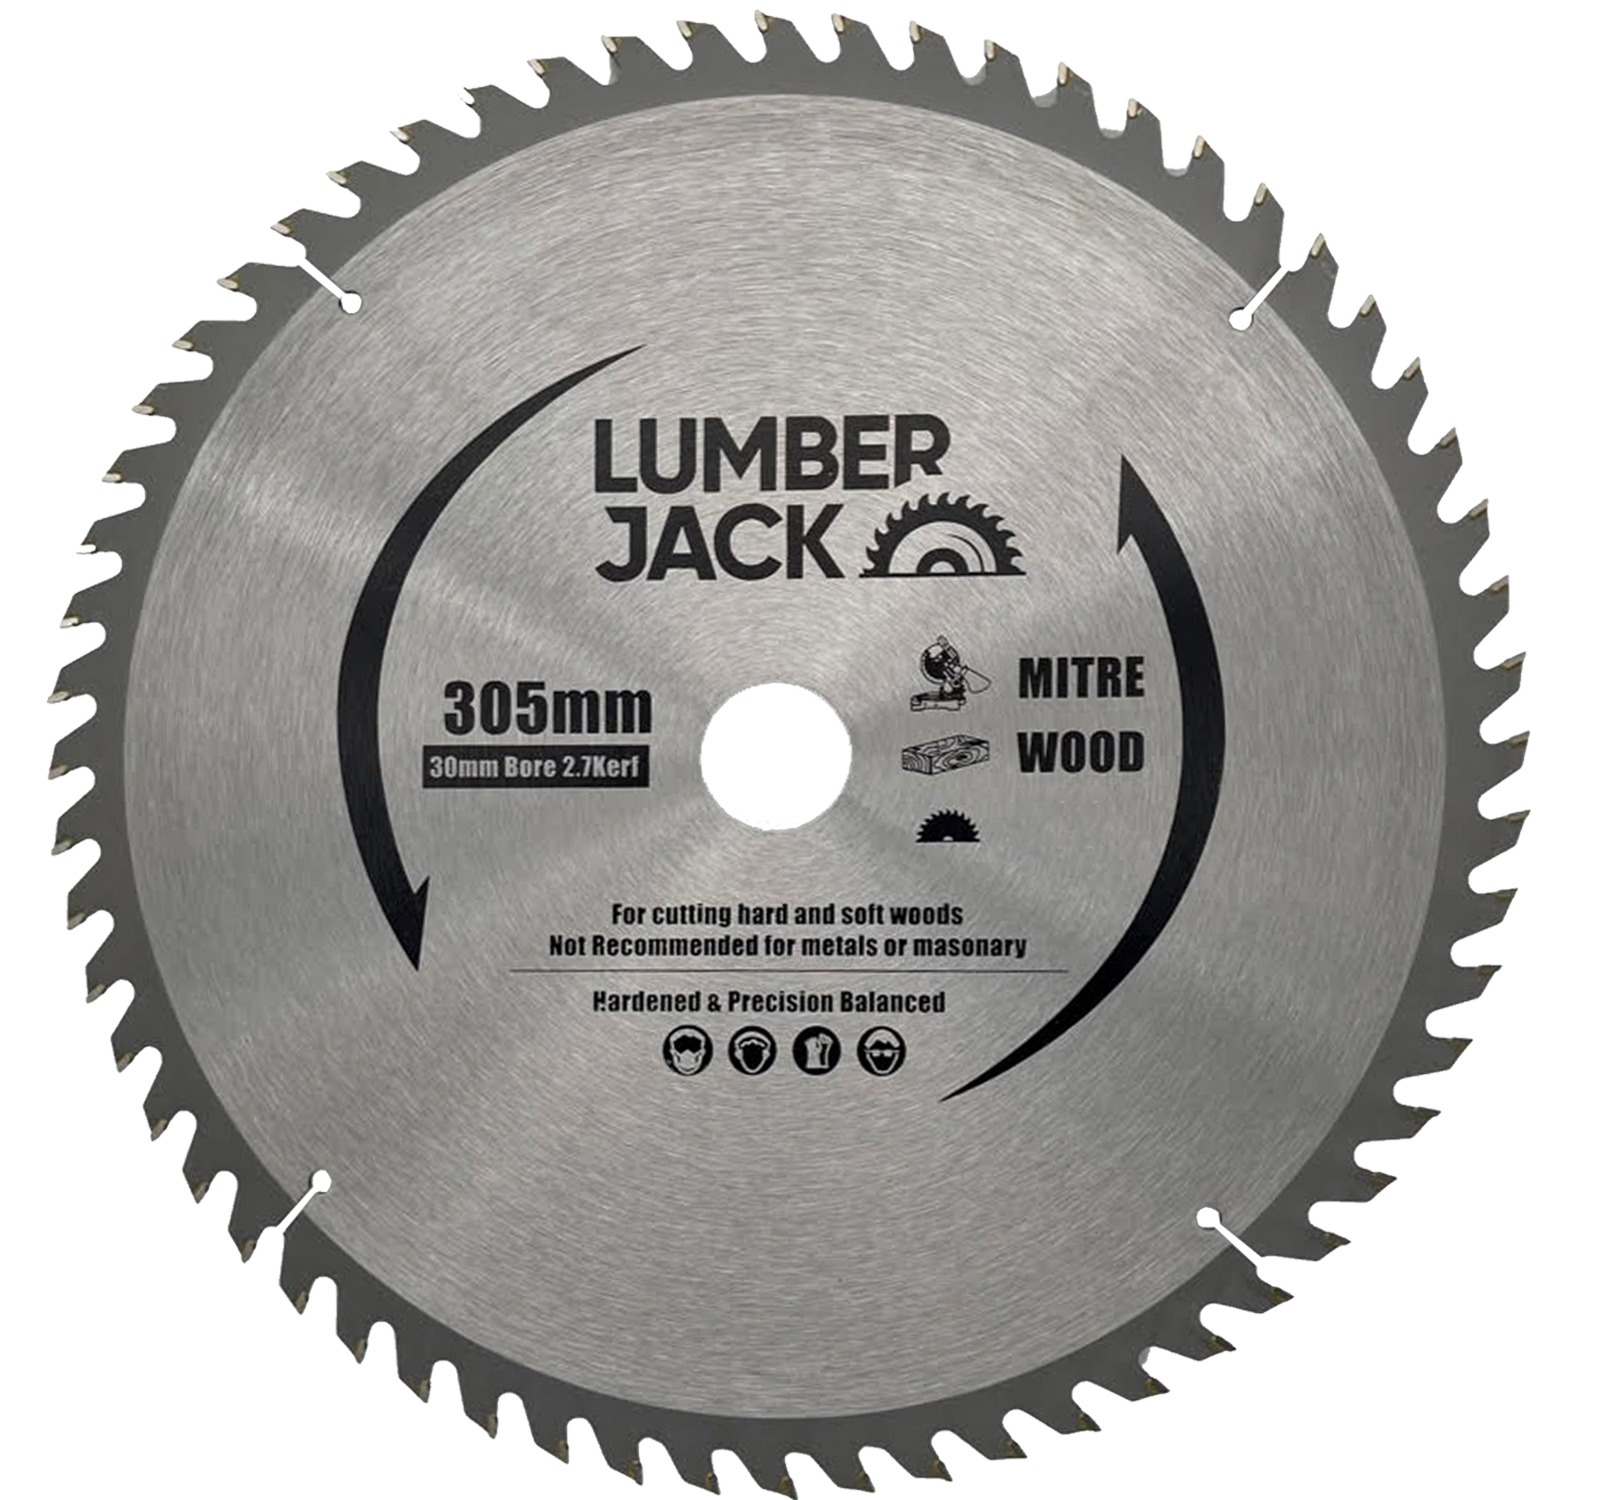 Lumberjack 305mm 80 Tooth Circular Saw Blade 30mm bore